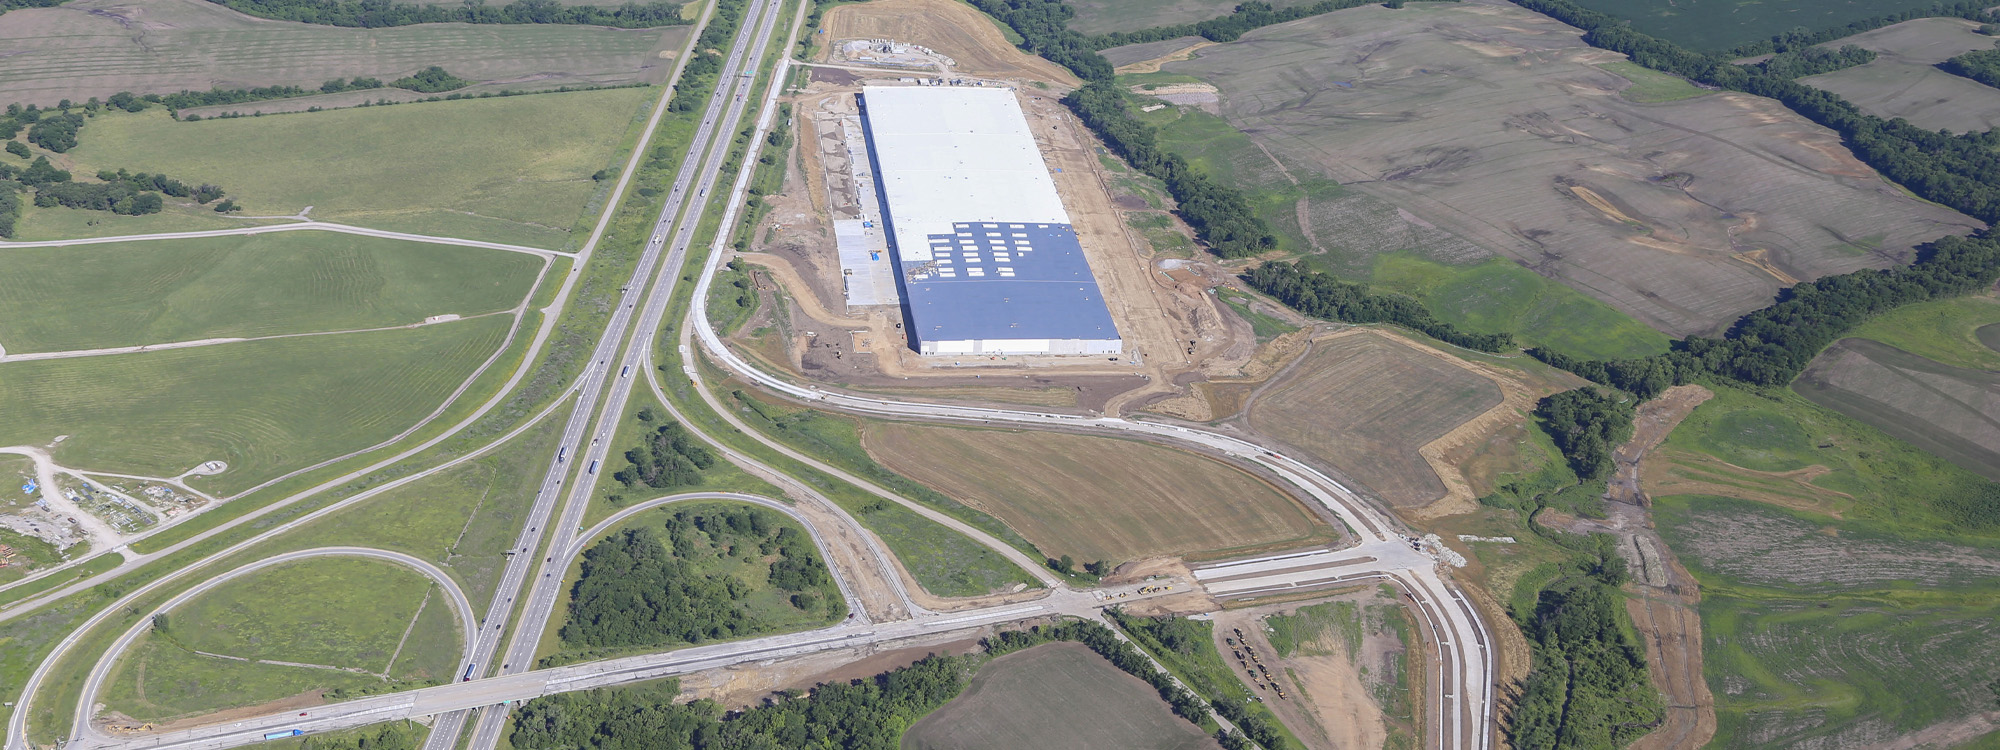 KCI 29 Logistics Park - 3,300-Acre Mega Site - 20M+ SF - Adjacent to KCI Airport - Hunt Midwest Industrial Development in Kansas City